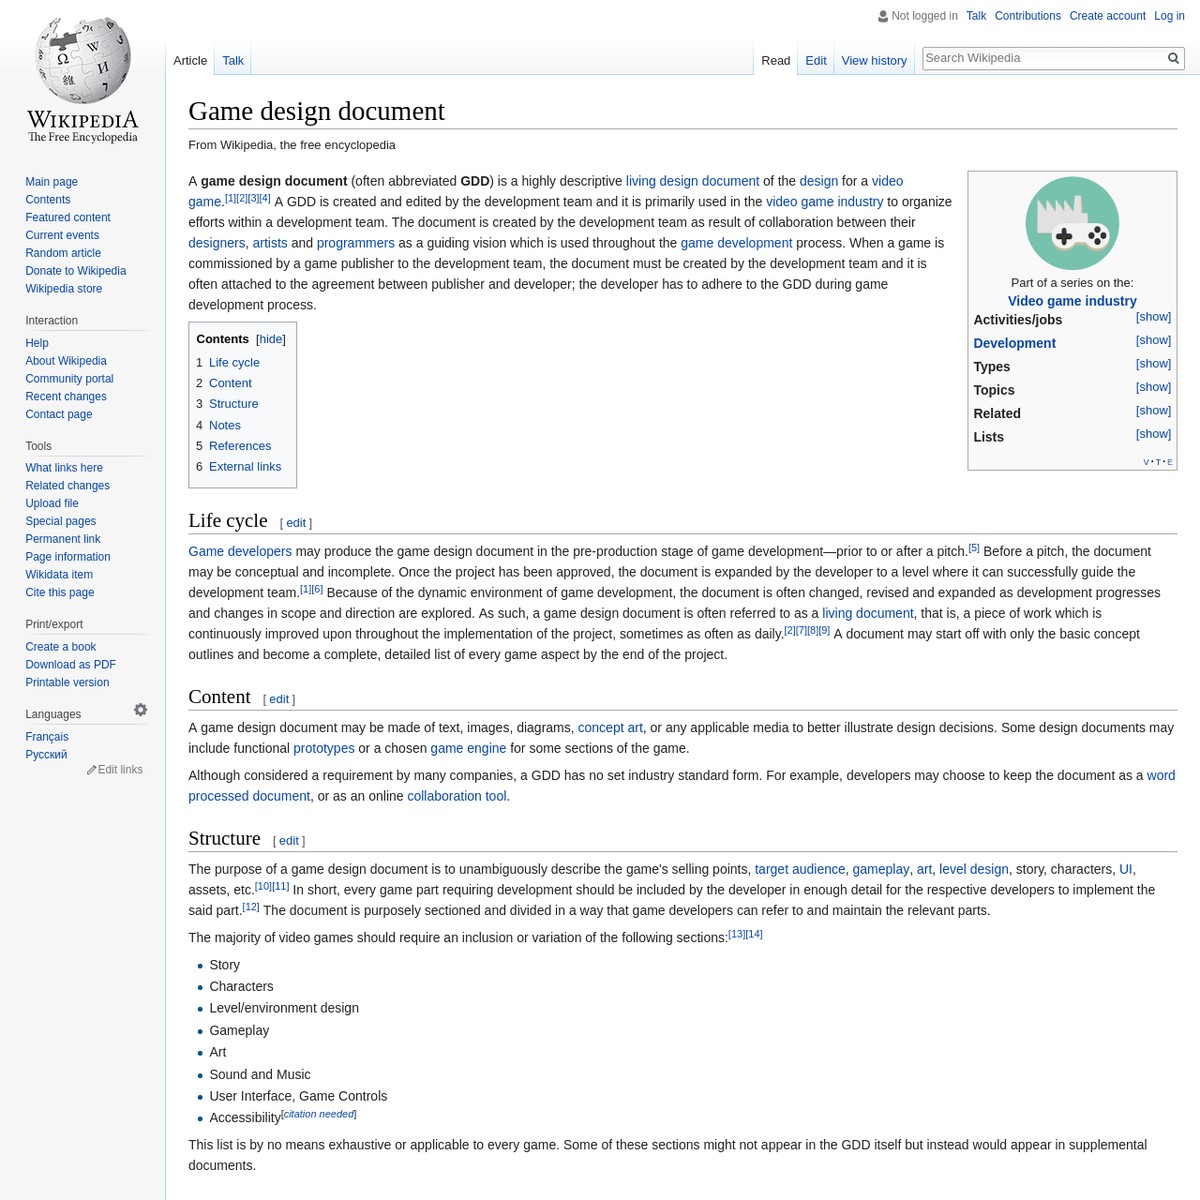 Game design document - Wikipedia